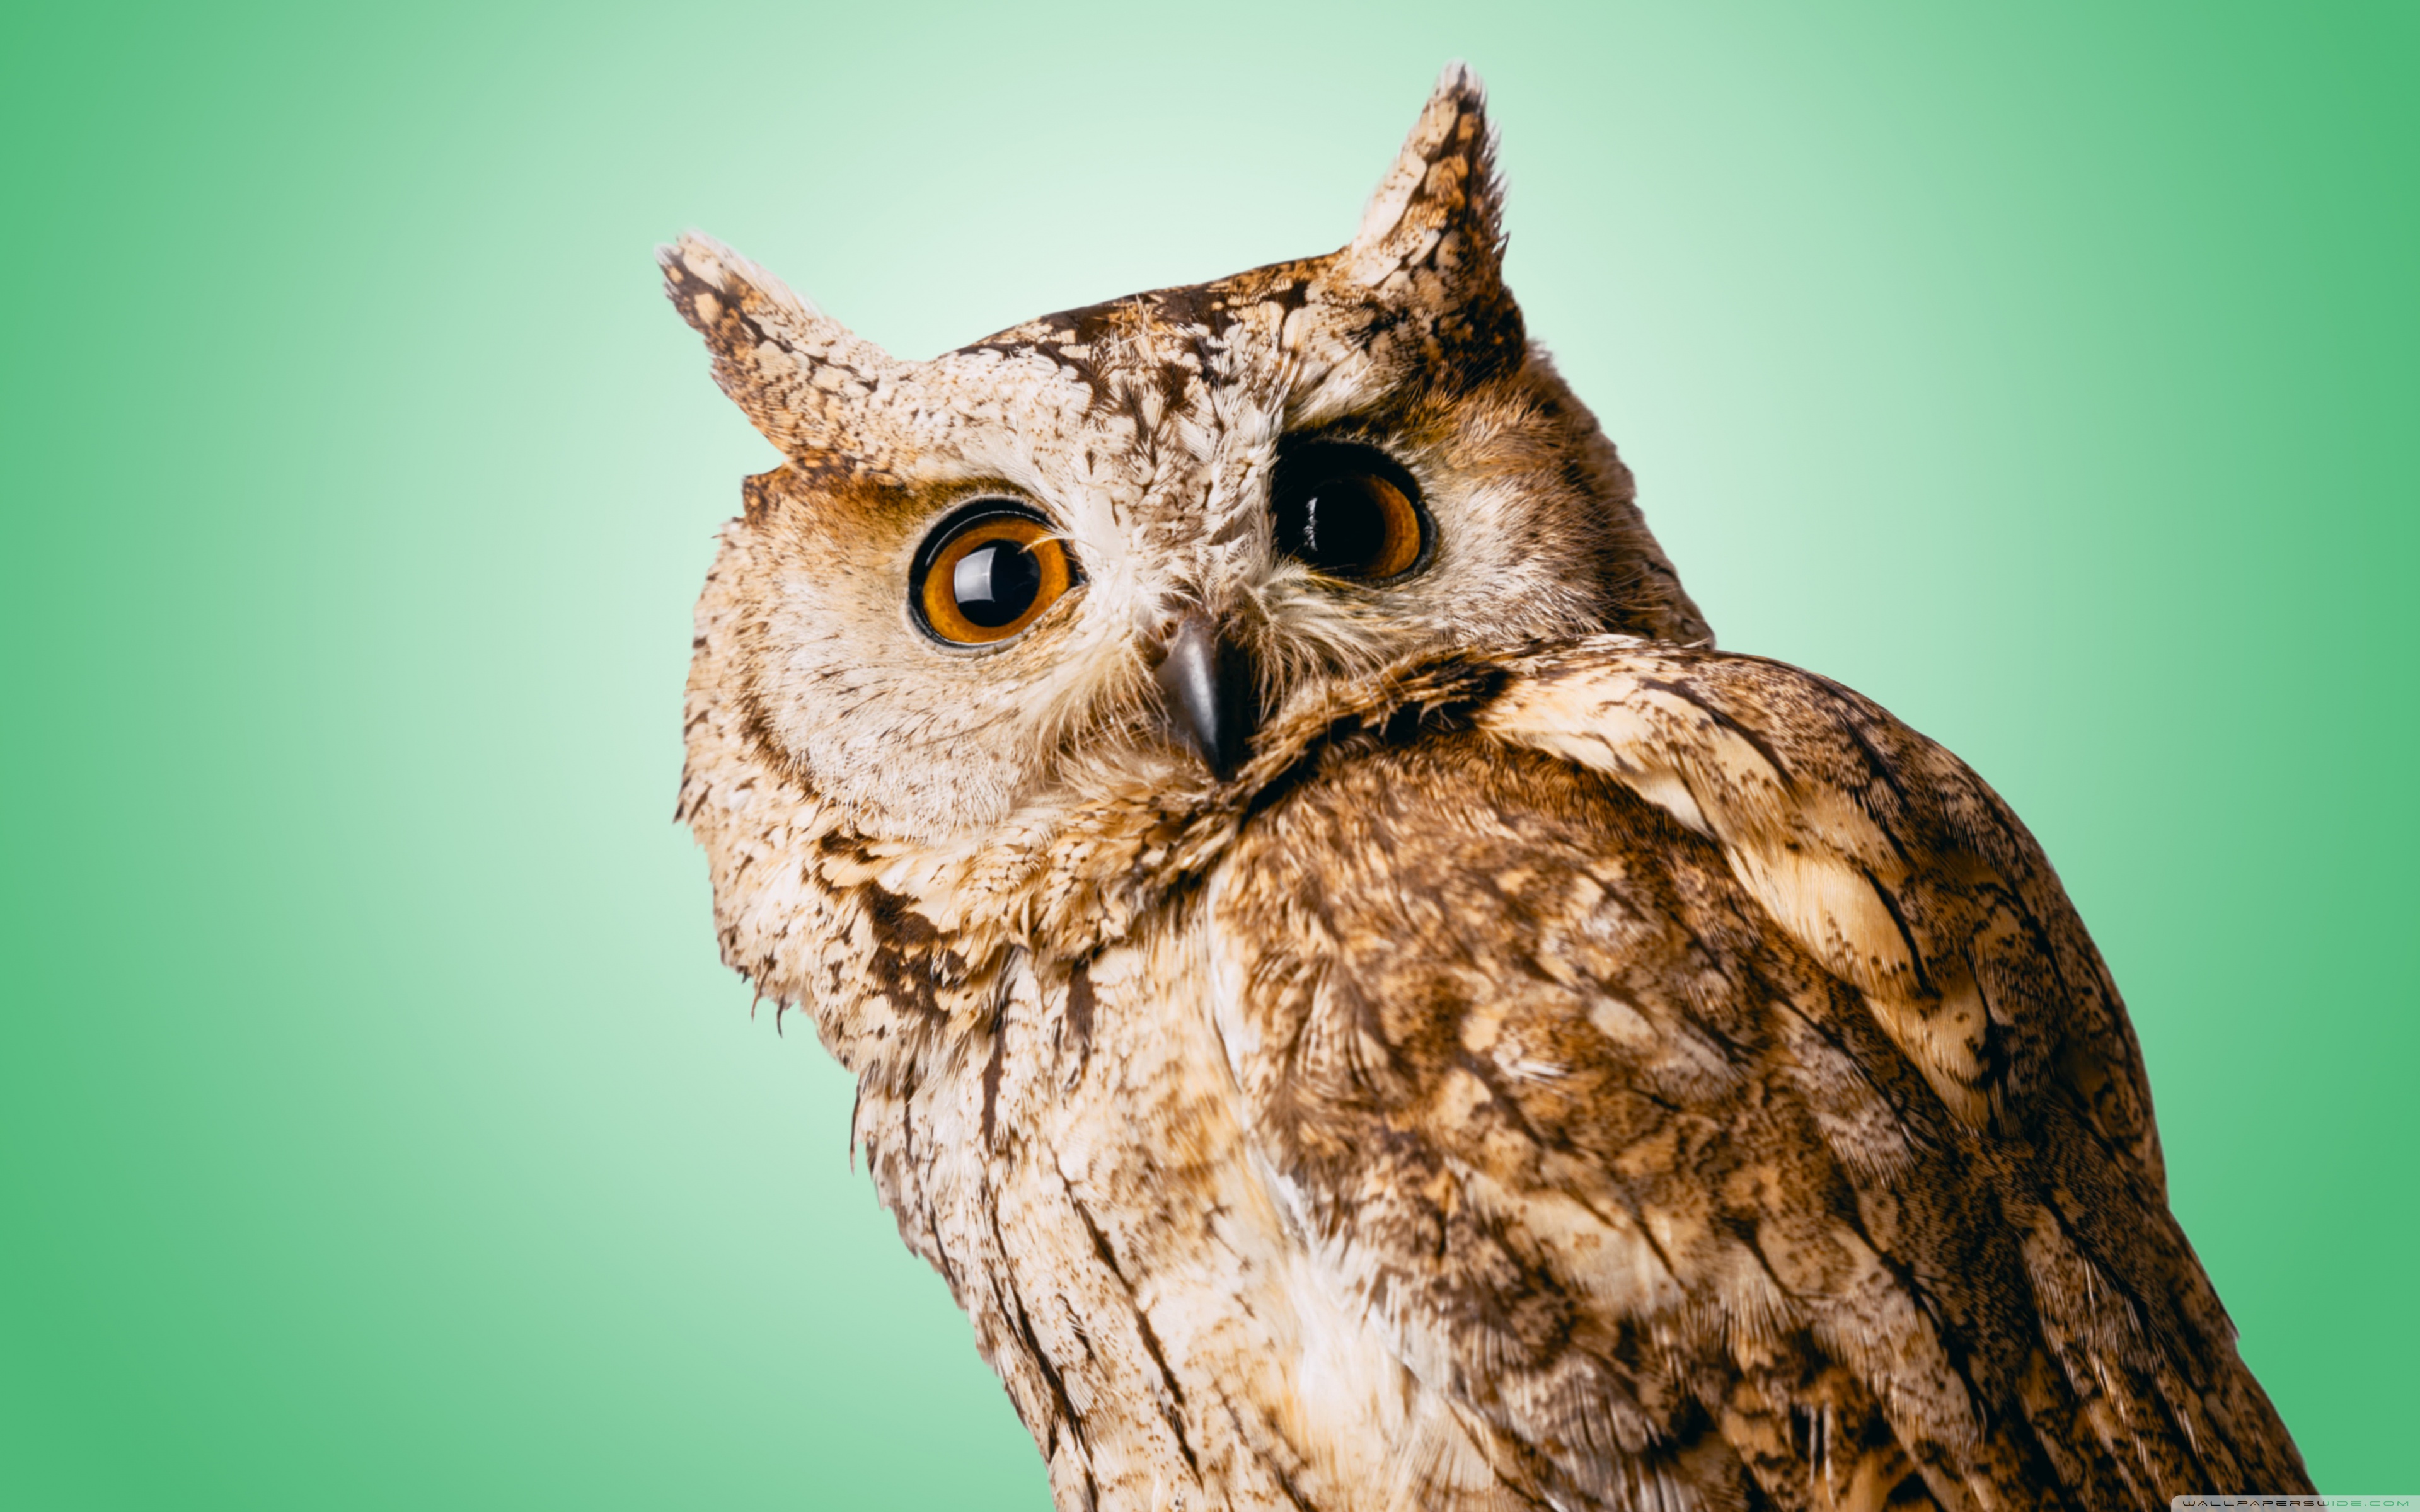 Green owl | Free stock photos - Rgbstock - Free stock images | tinneketin |  January - 22 - 2013 (230)